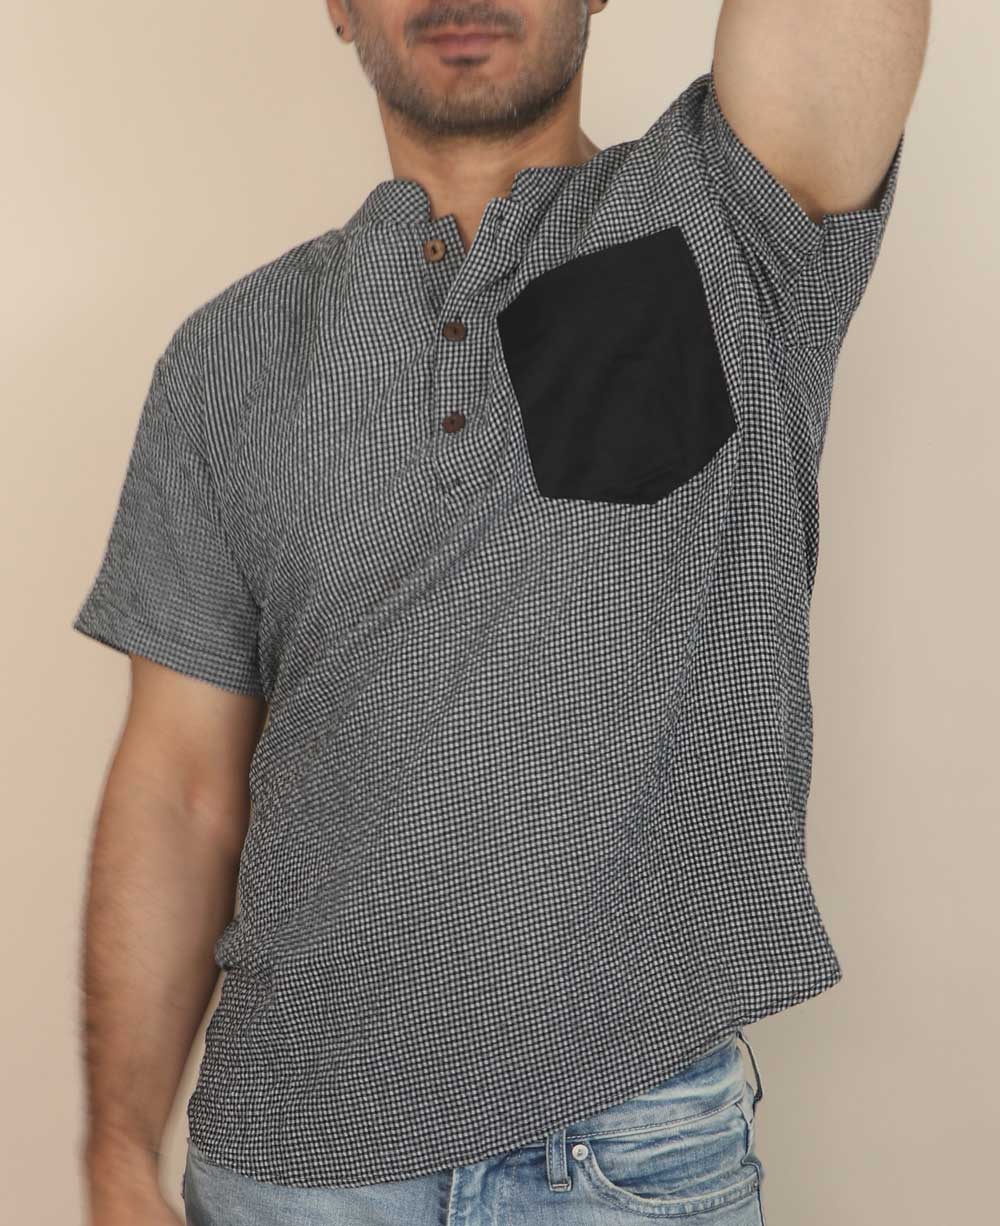 Men's Button Up Kurta Shirt With Solid Pocket - Shirts & Tops Brown M